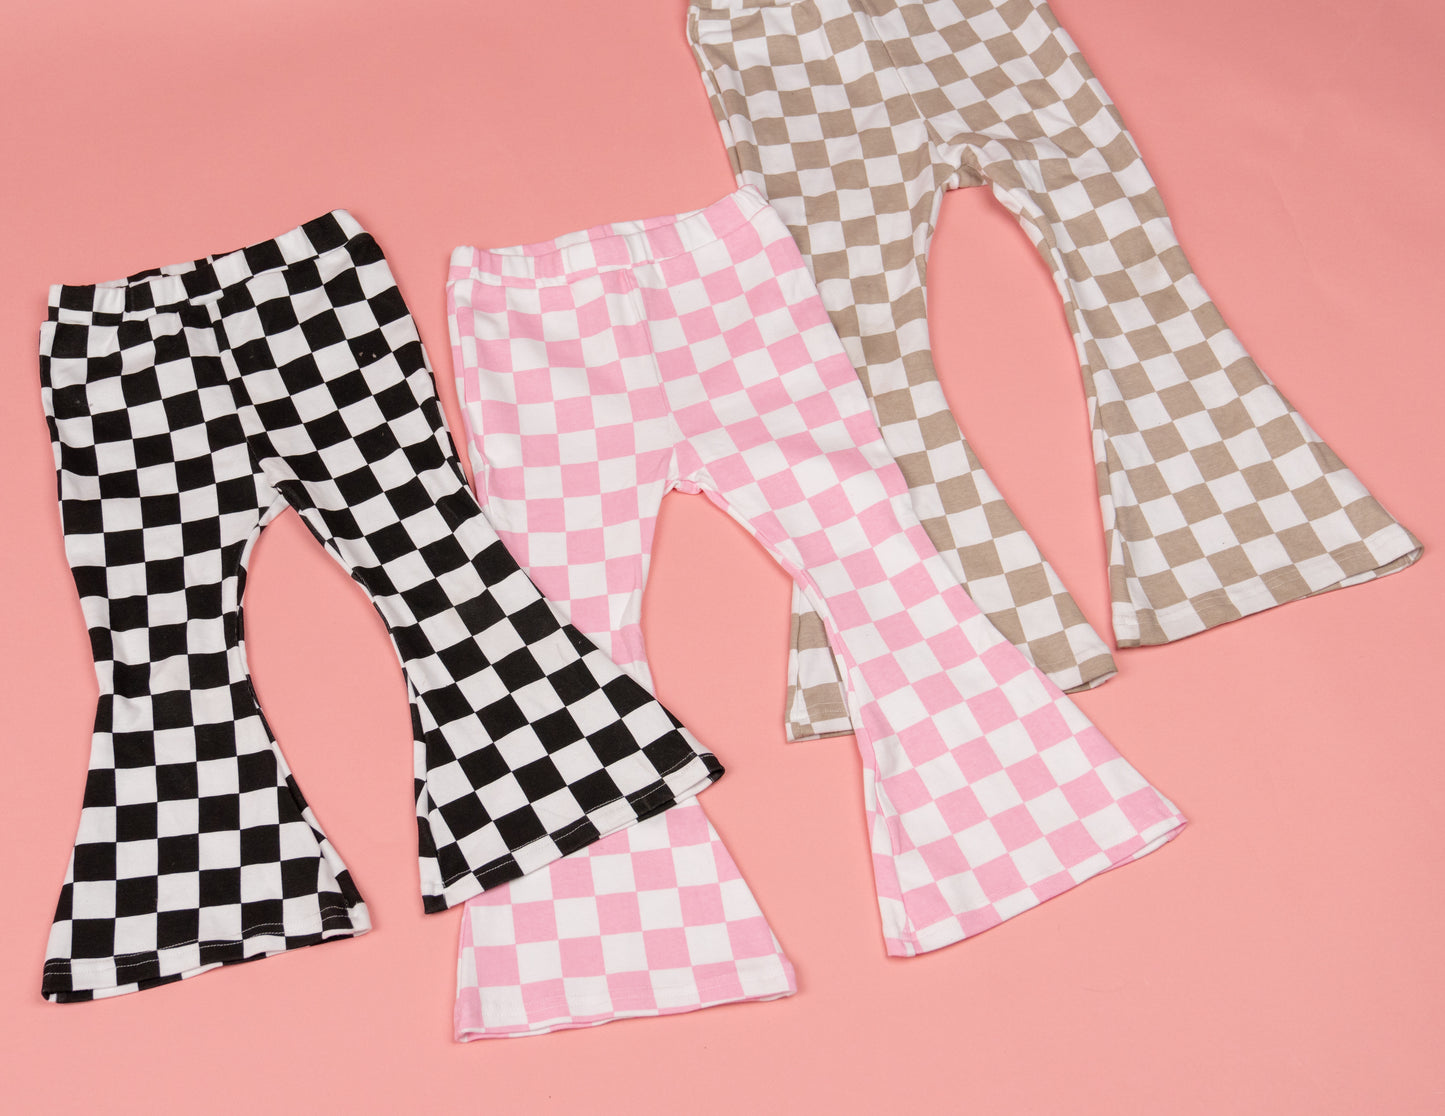 Checkered Flare Pants - Black